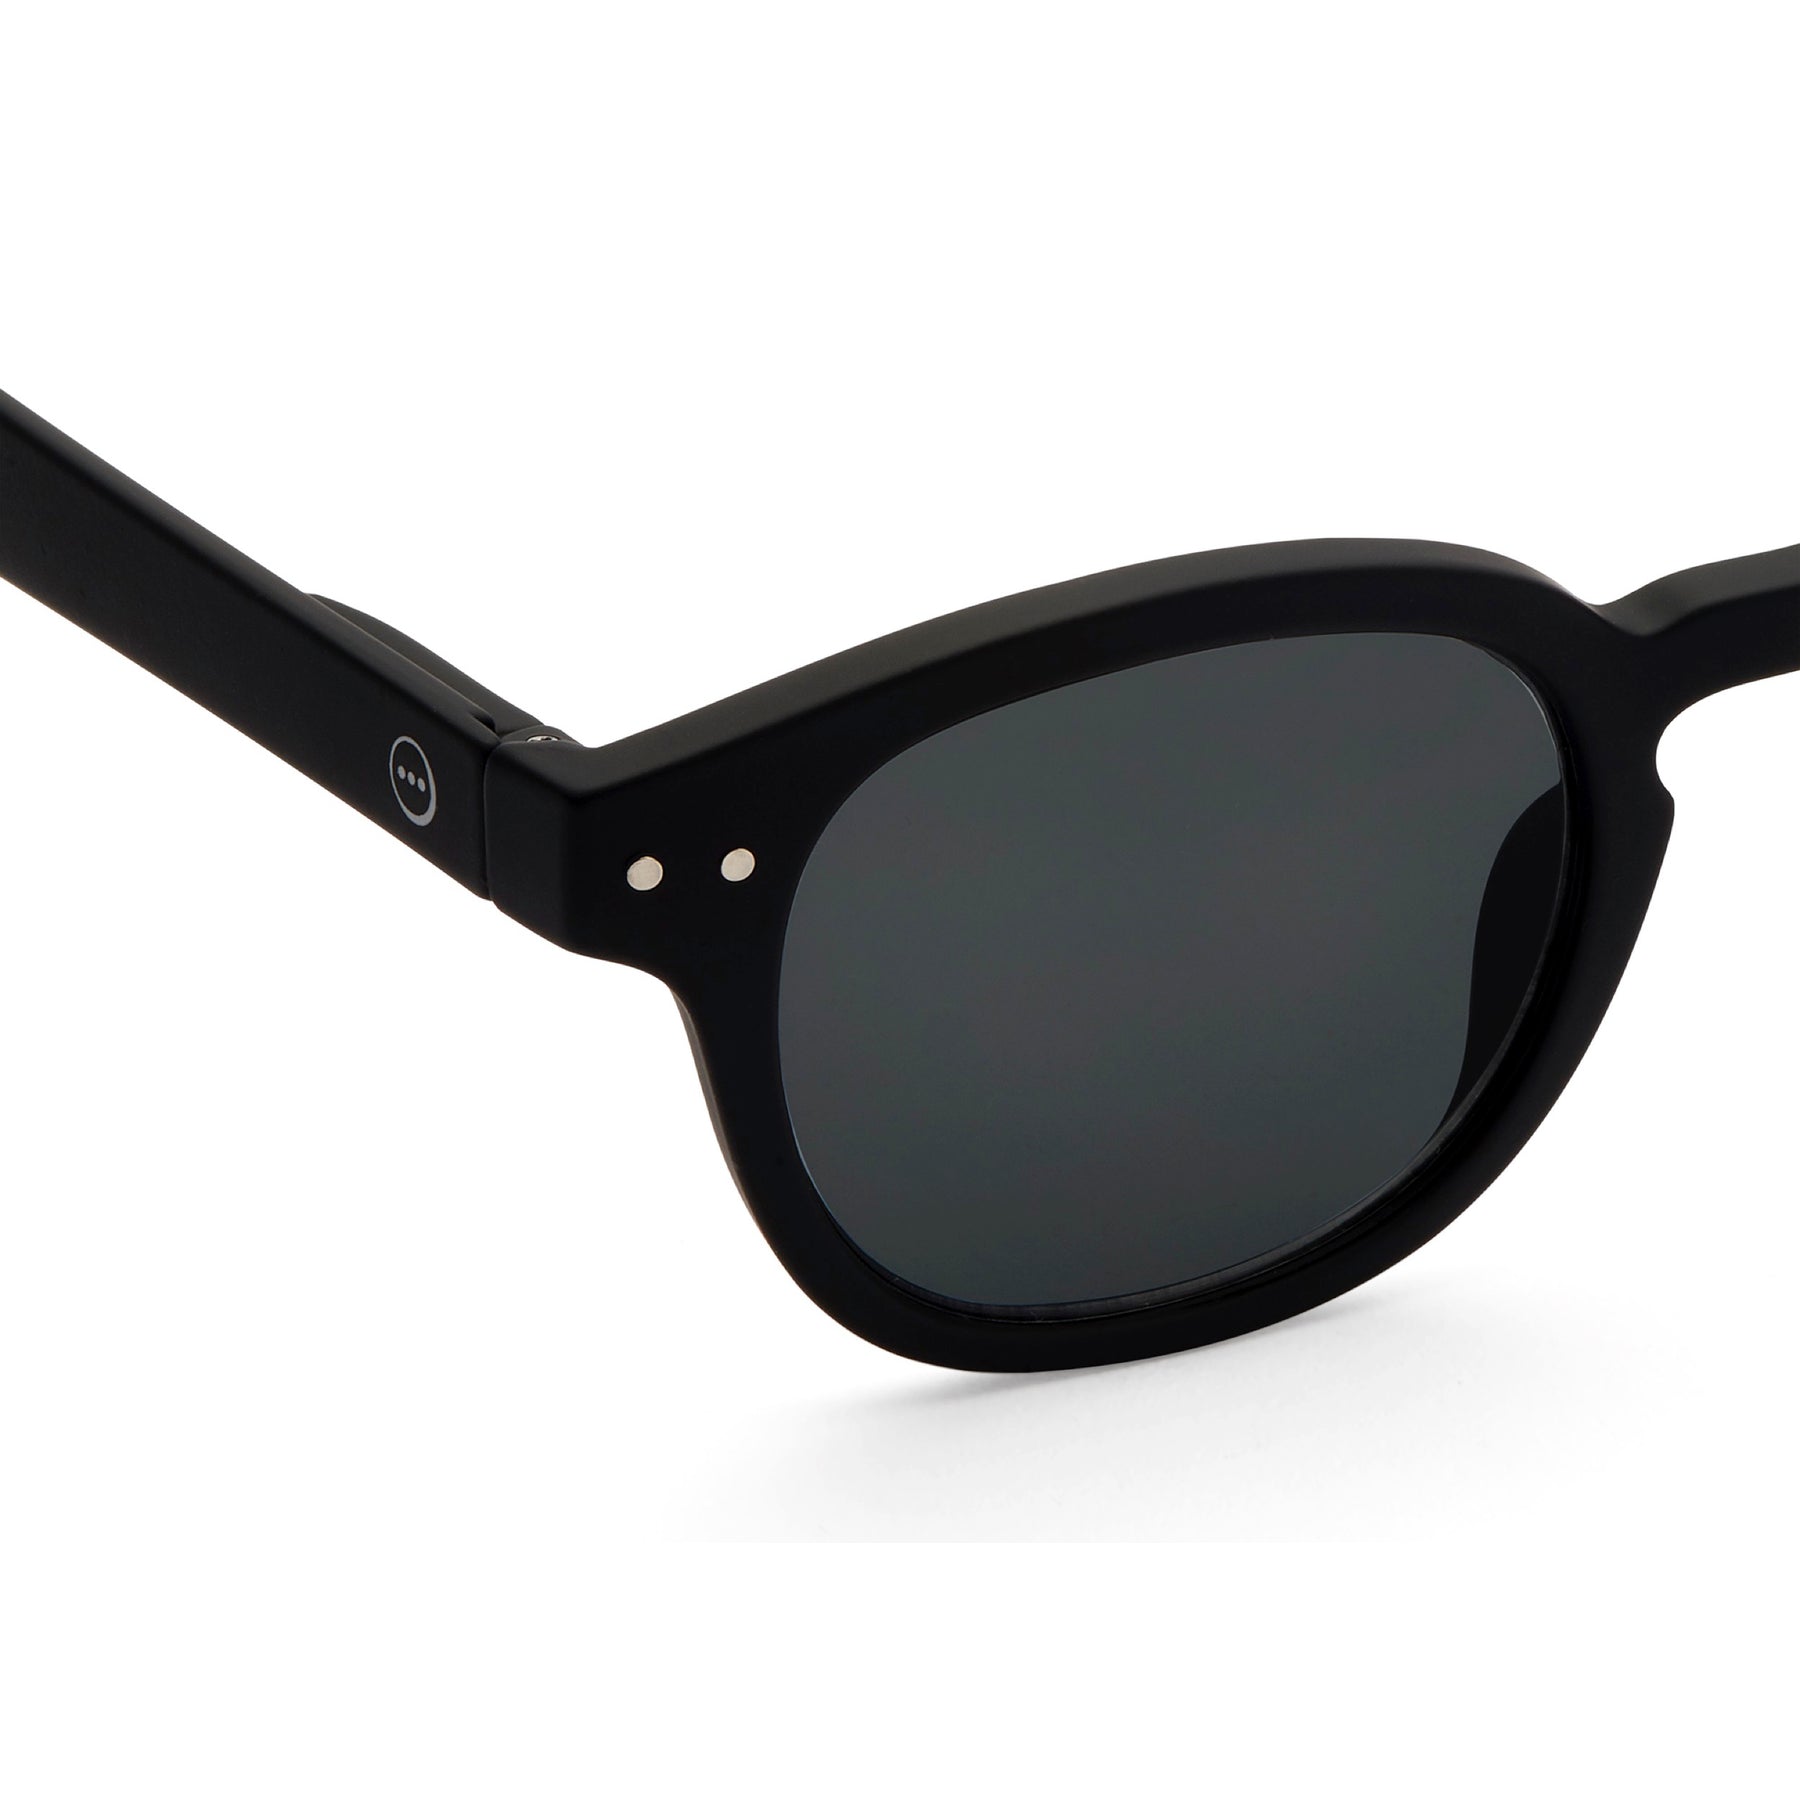 IZIPIZI, Sunglass Readers C Black, Sunglasses,